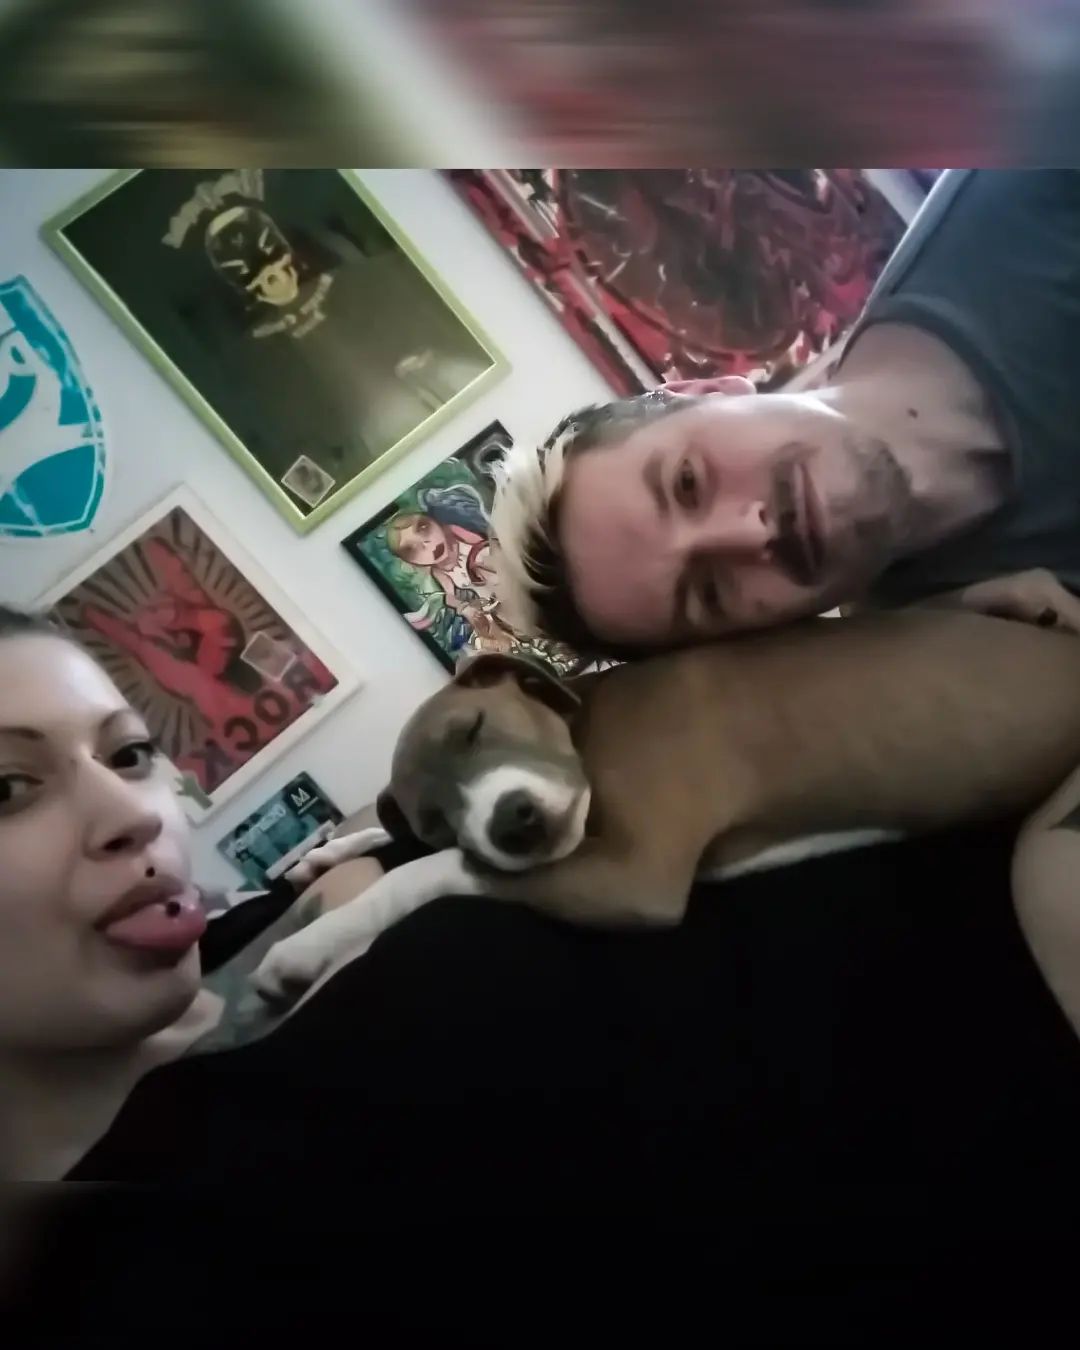 #family 🐶💖👫🏼
#dog #puppy #puppylove #love #familyphotography #beauty #girls #instagood #lovedogs #me #mydog #pitbullsofinstagram #pitbull #puppies  #pitbullsofficial #amstaff #tattoo #tattoos 
@mattia.bacchi.76